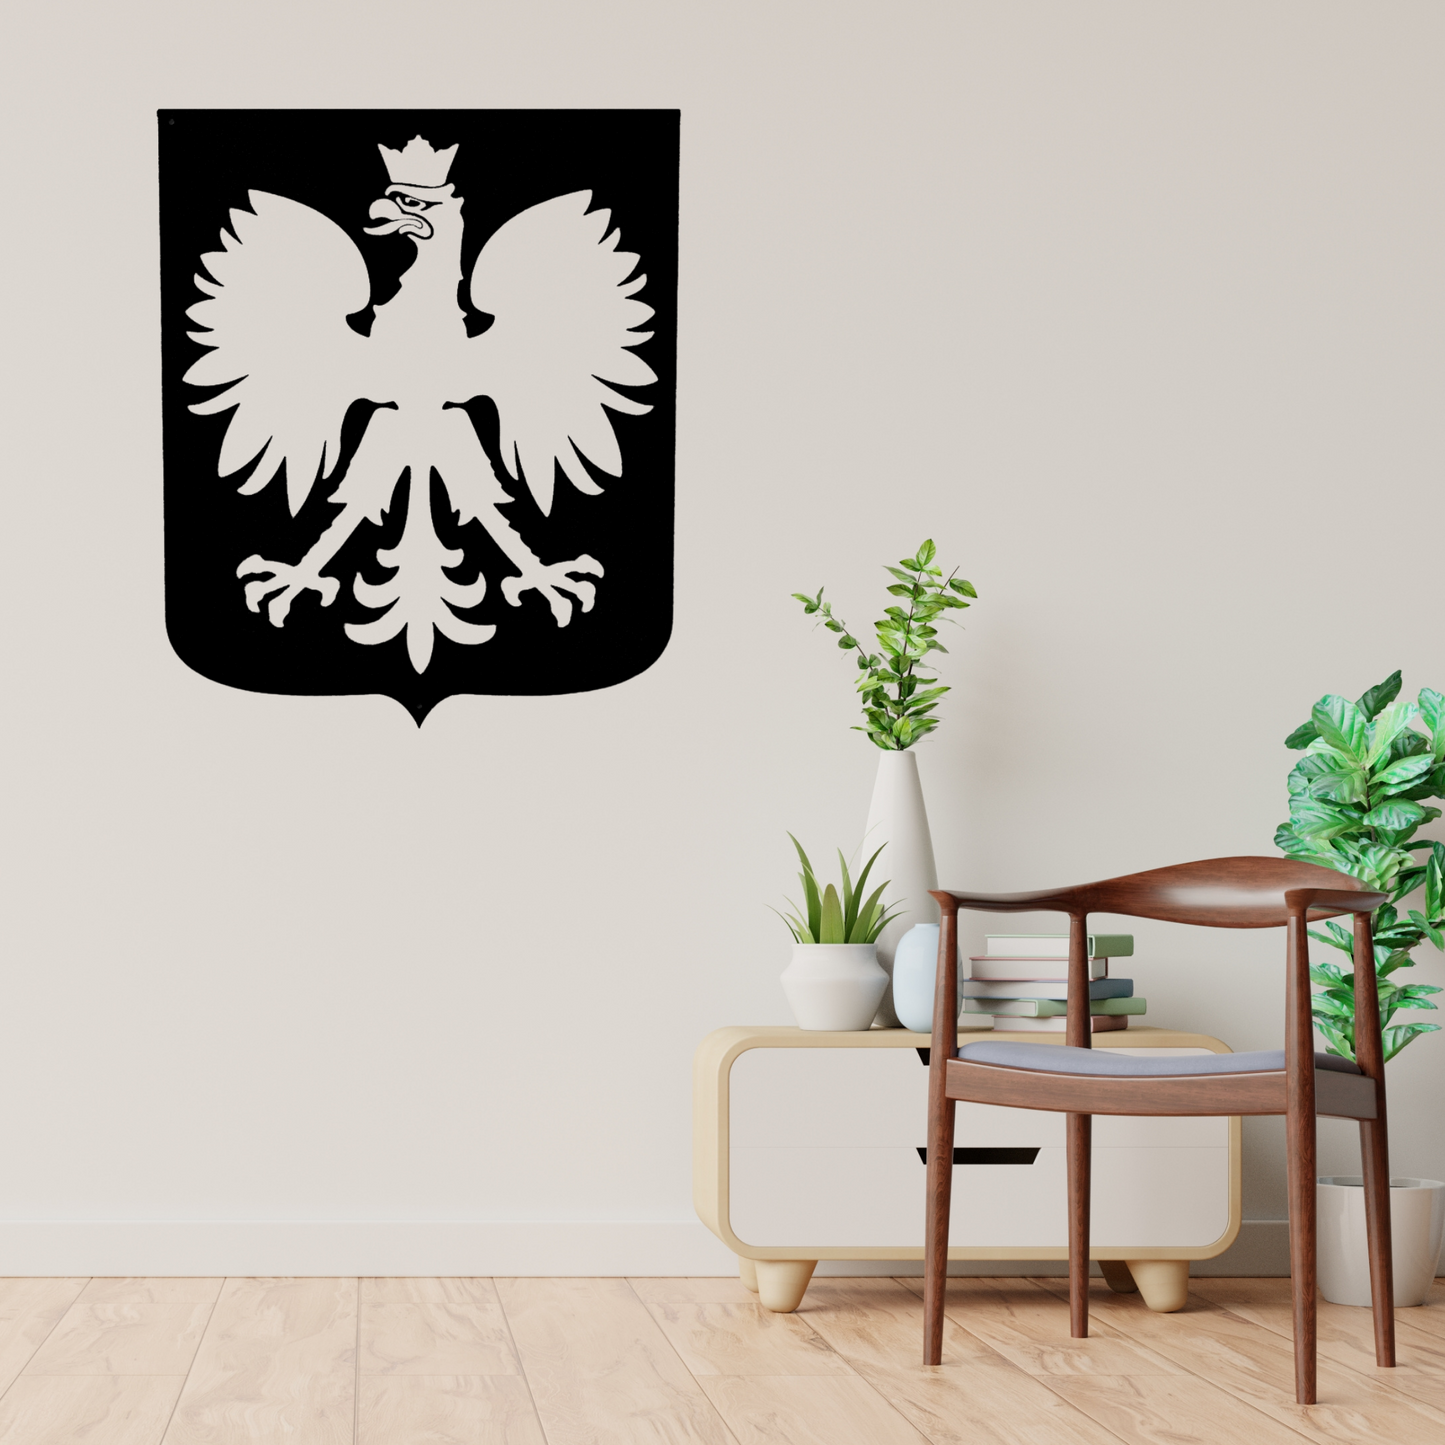 Polish Eagle - Steel Sign, House Decor, Wall Art, Metal Signs, Metal Decorative Sign, Metal Monogram, Dining Room Wall Decor